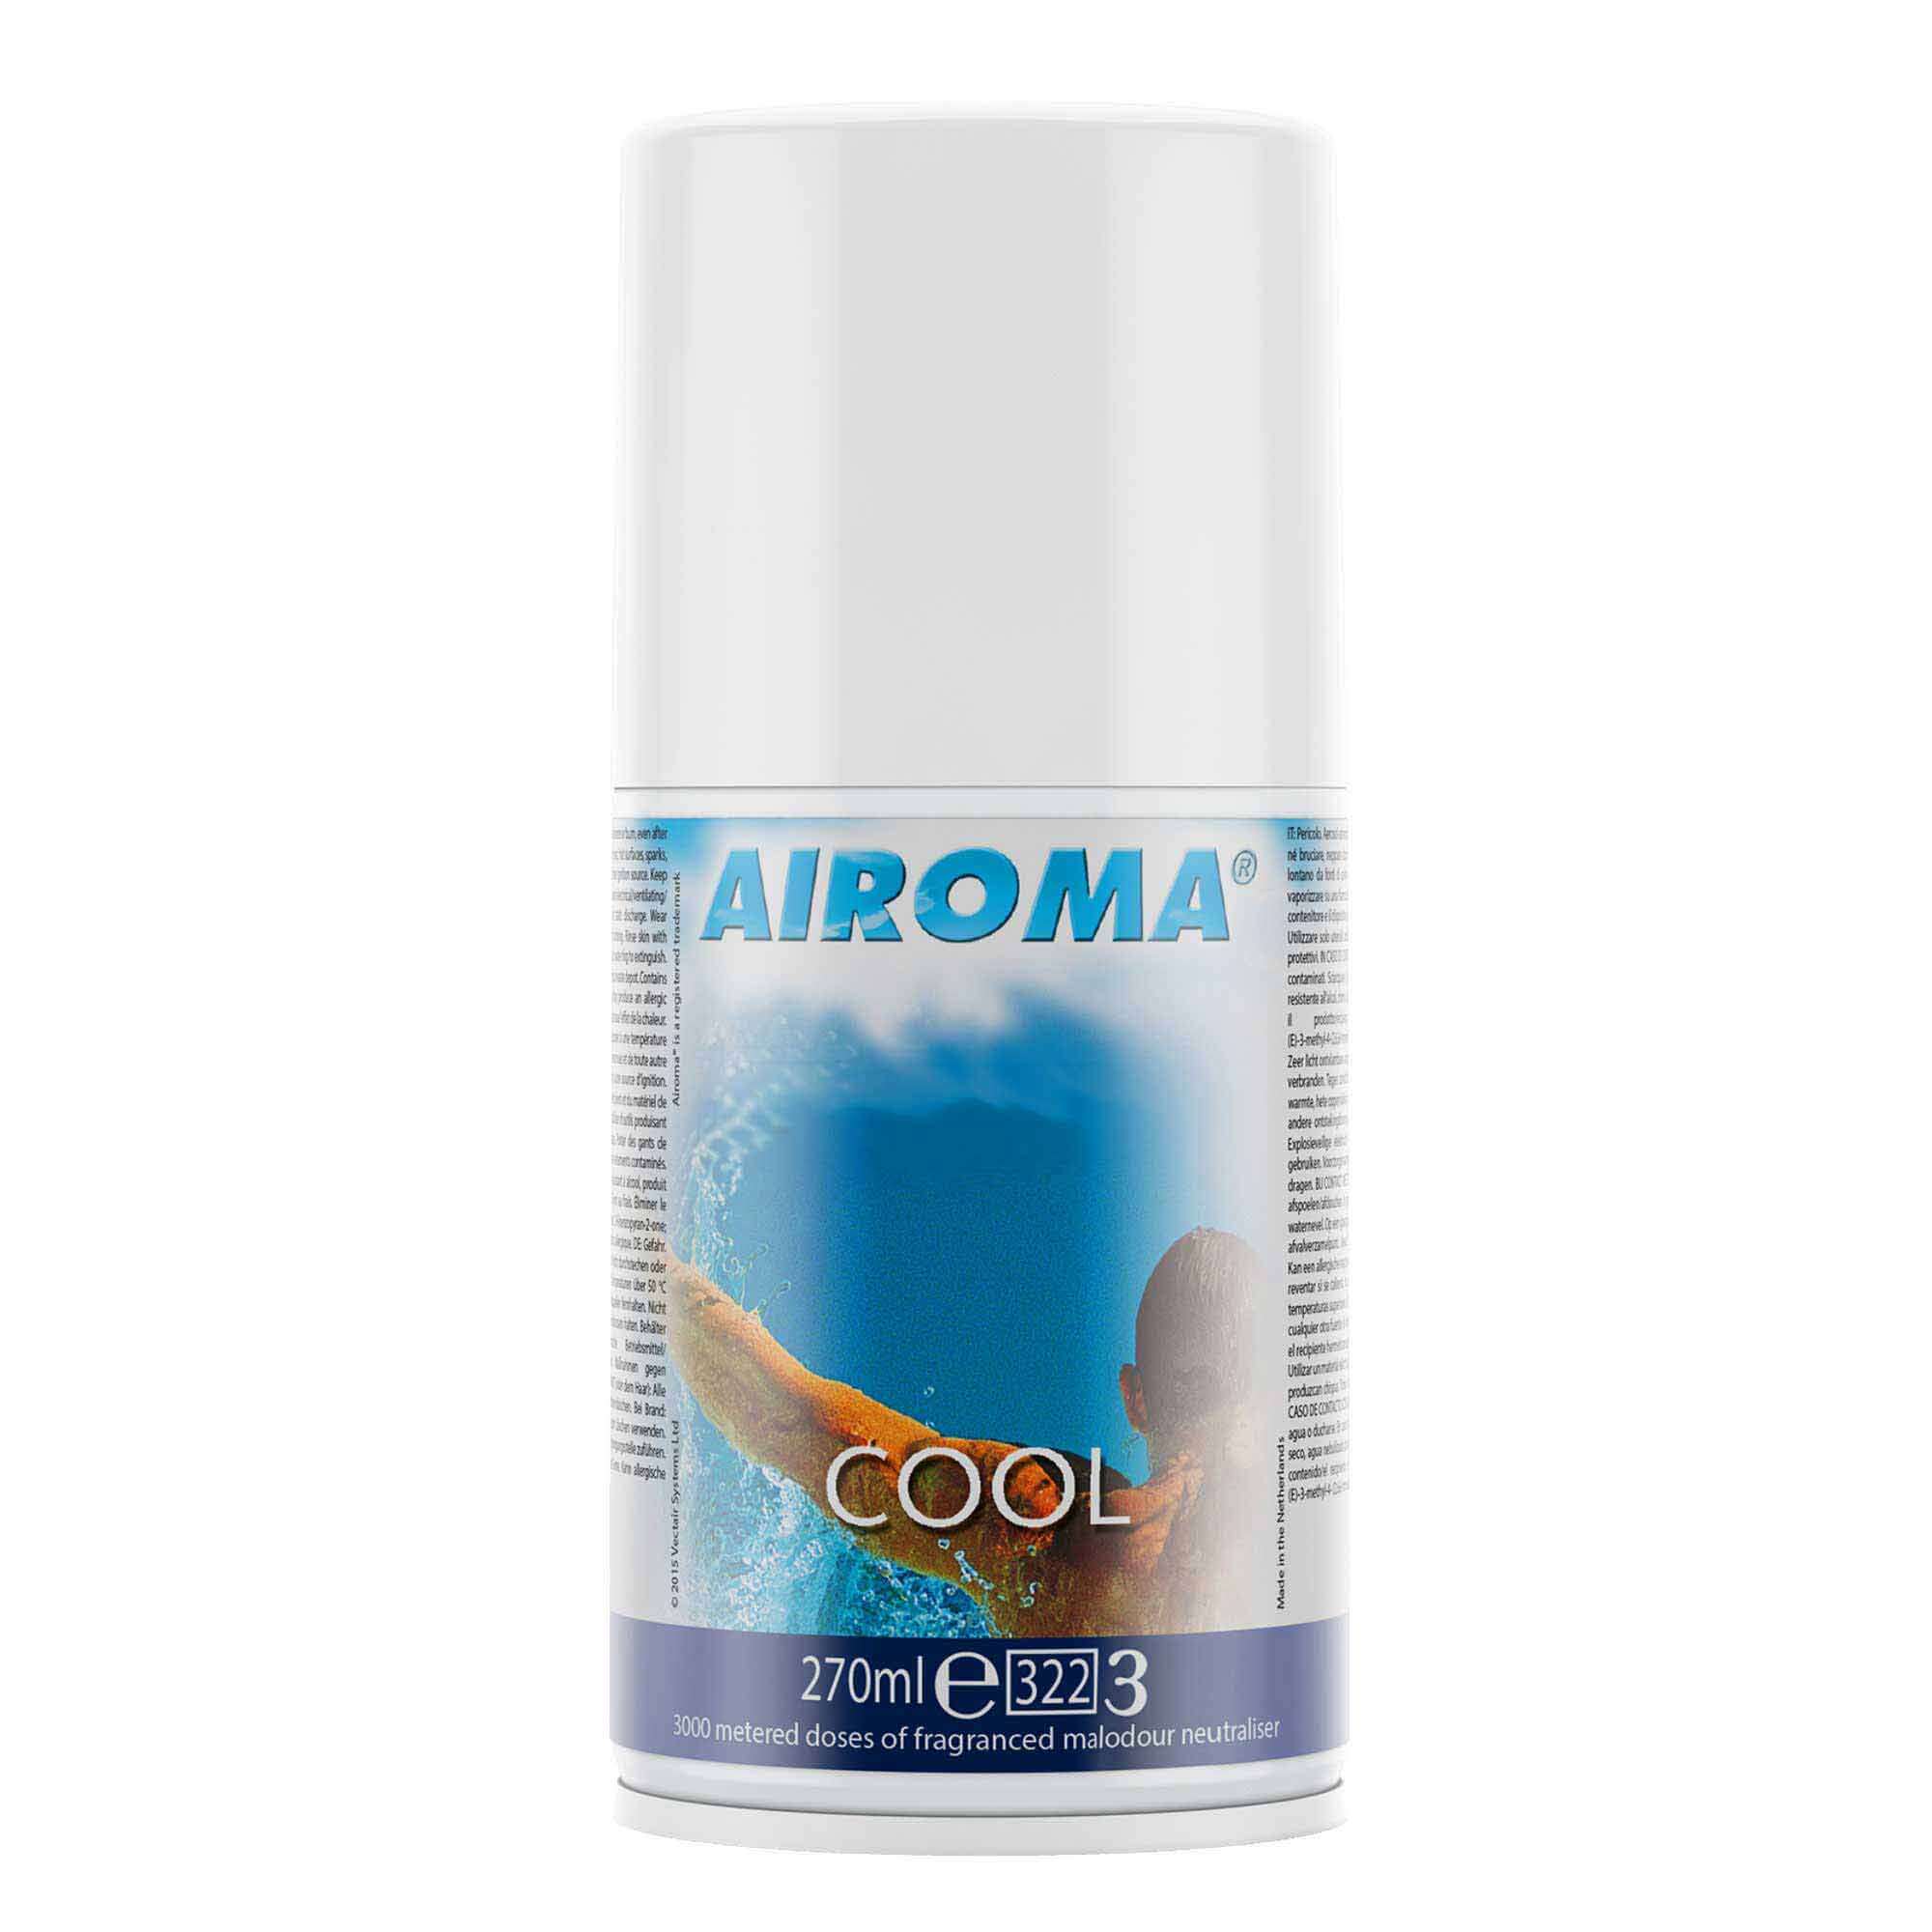 Airoma Air Freshener Refills 270ml Cool